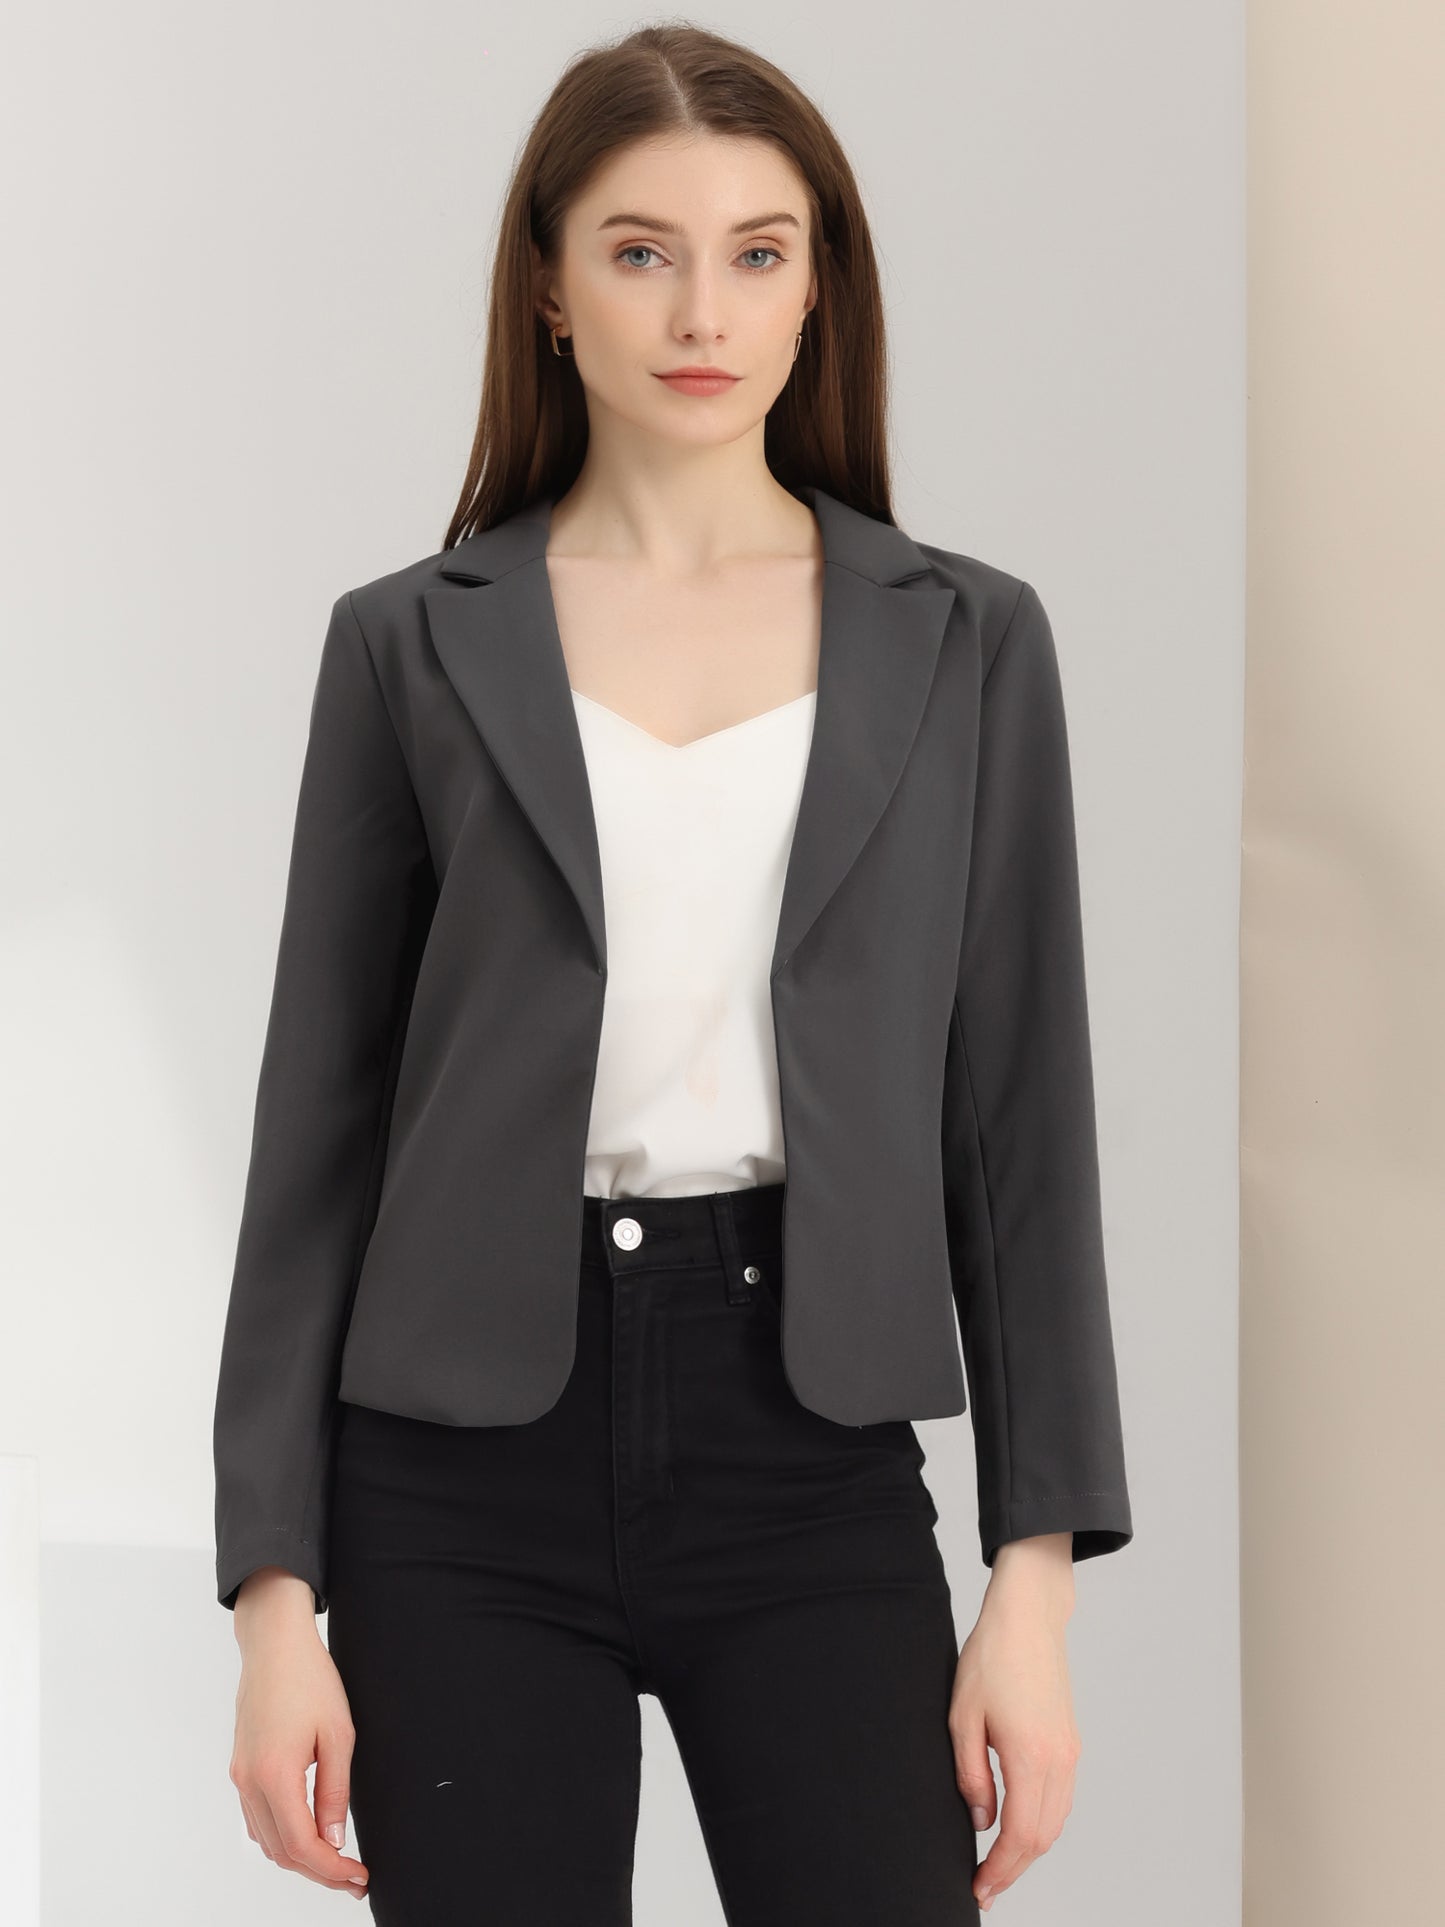 Allegra K Open Front Business Casual Workwear Crop Suit Blazer Jacket Dark Grey-Solid